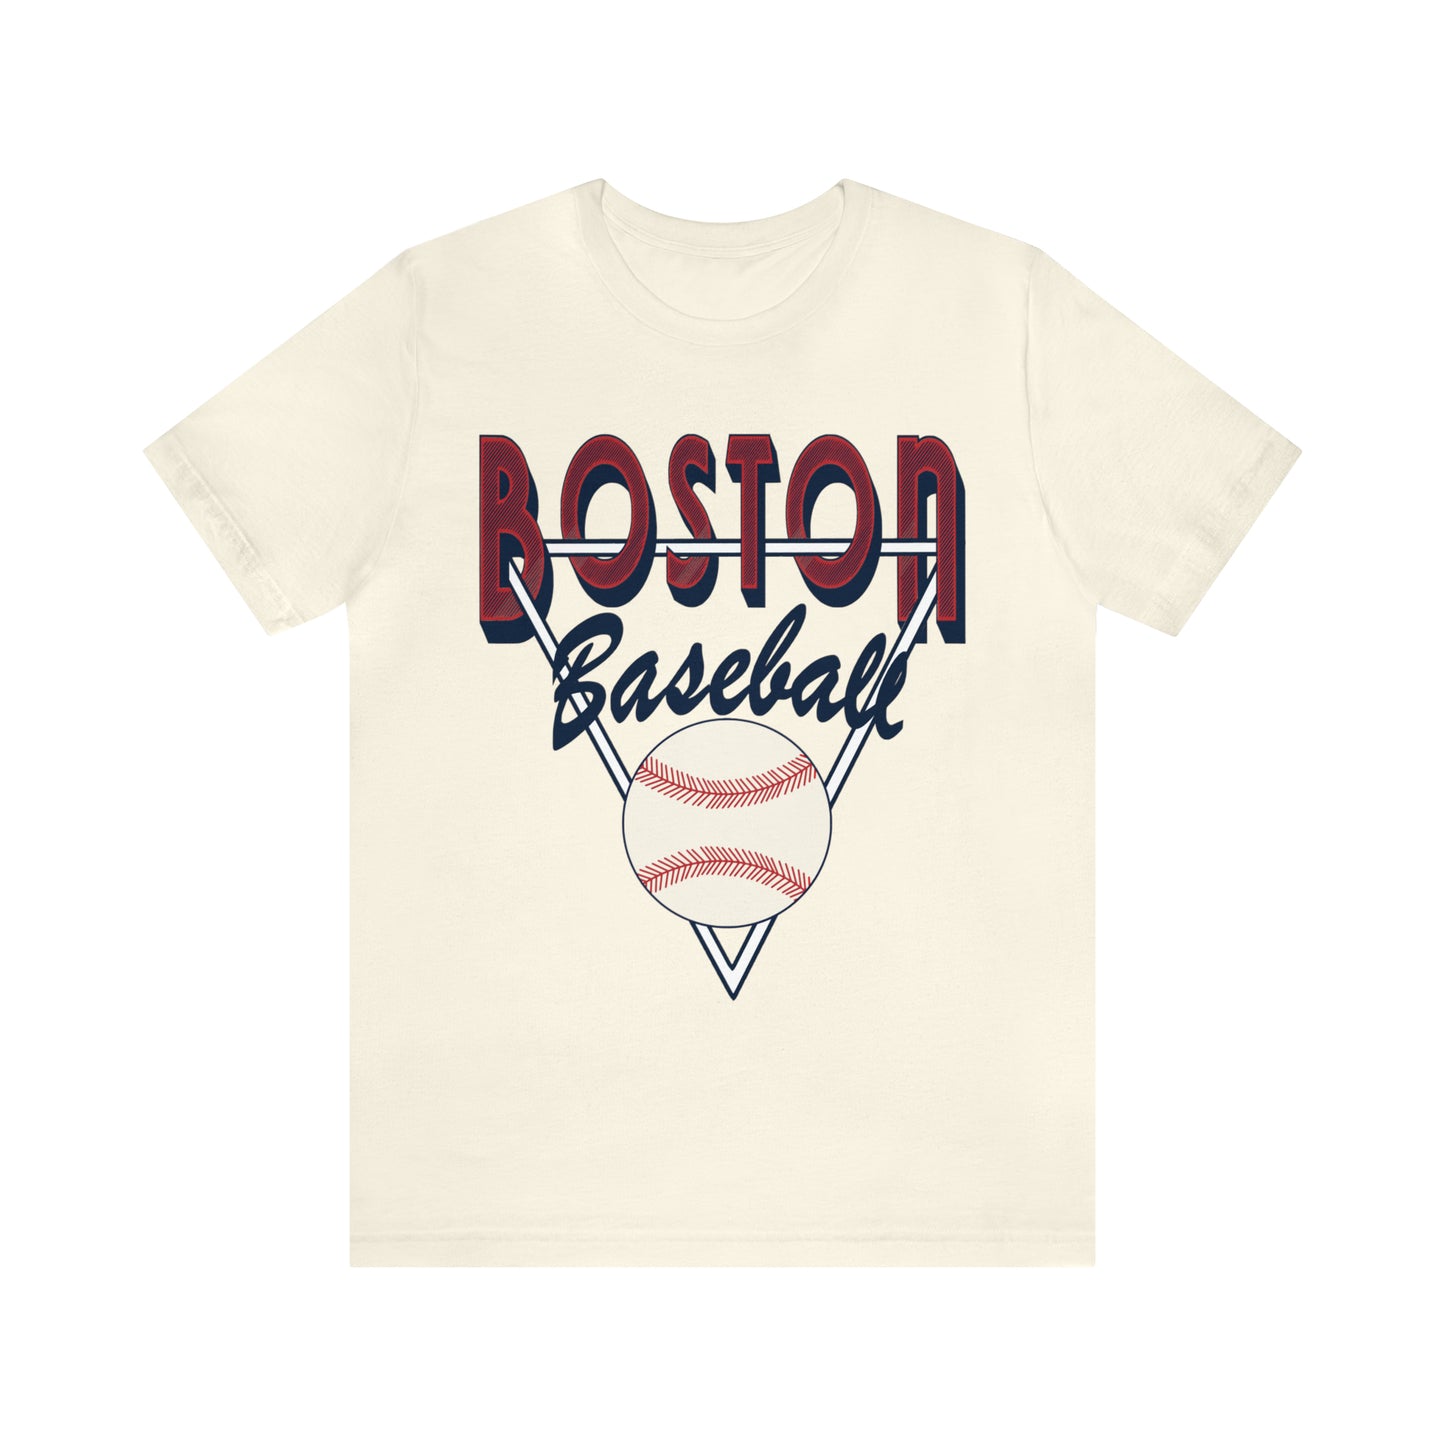 Retro Boston Baseball Tee - Vintage Style Short Sleeve T-Shirt - MLB Baseball Gear - Vintage Men's & Women's Apparel